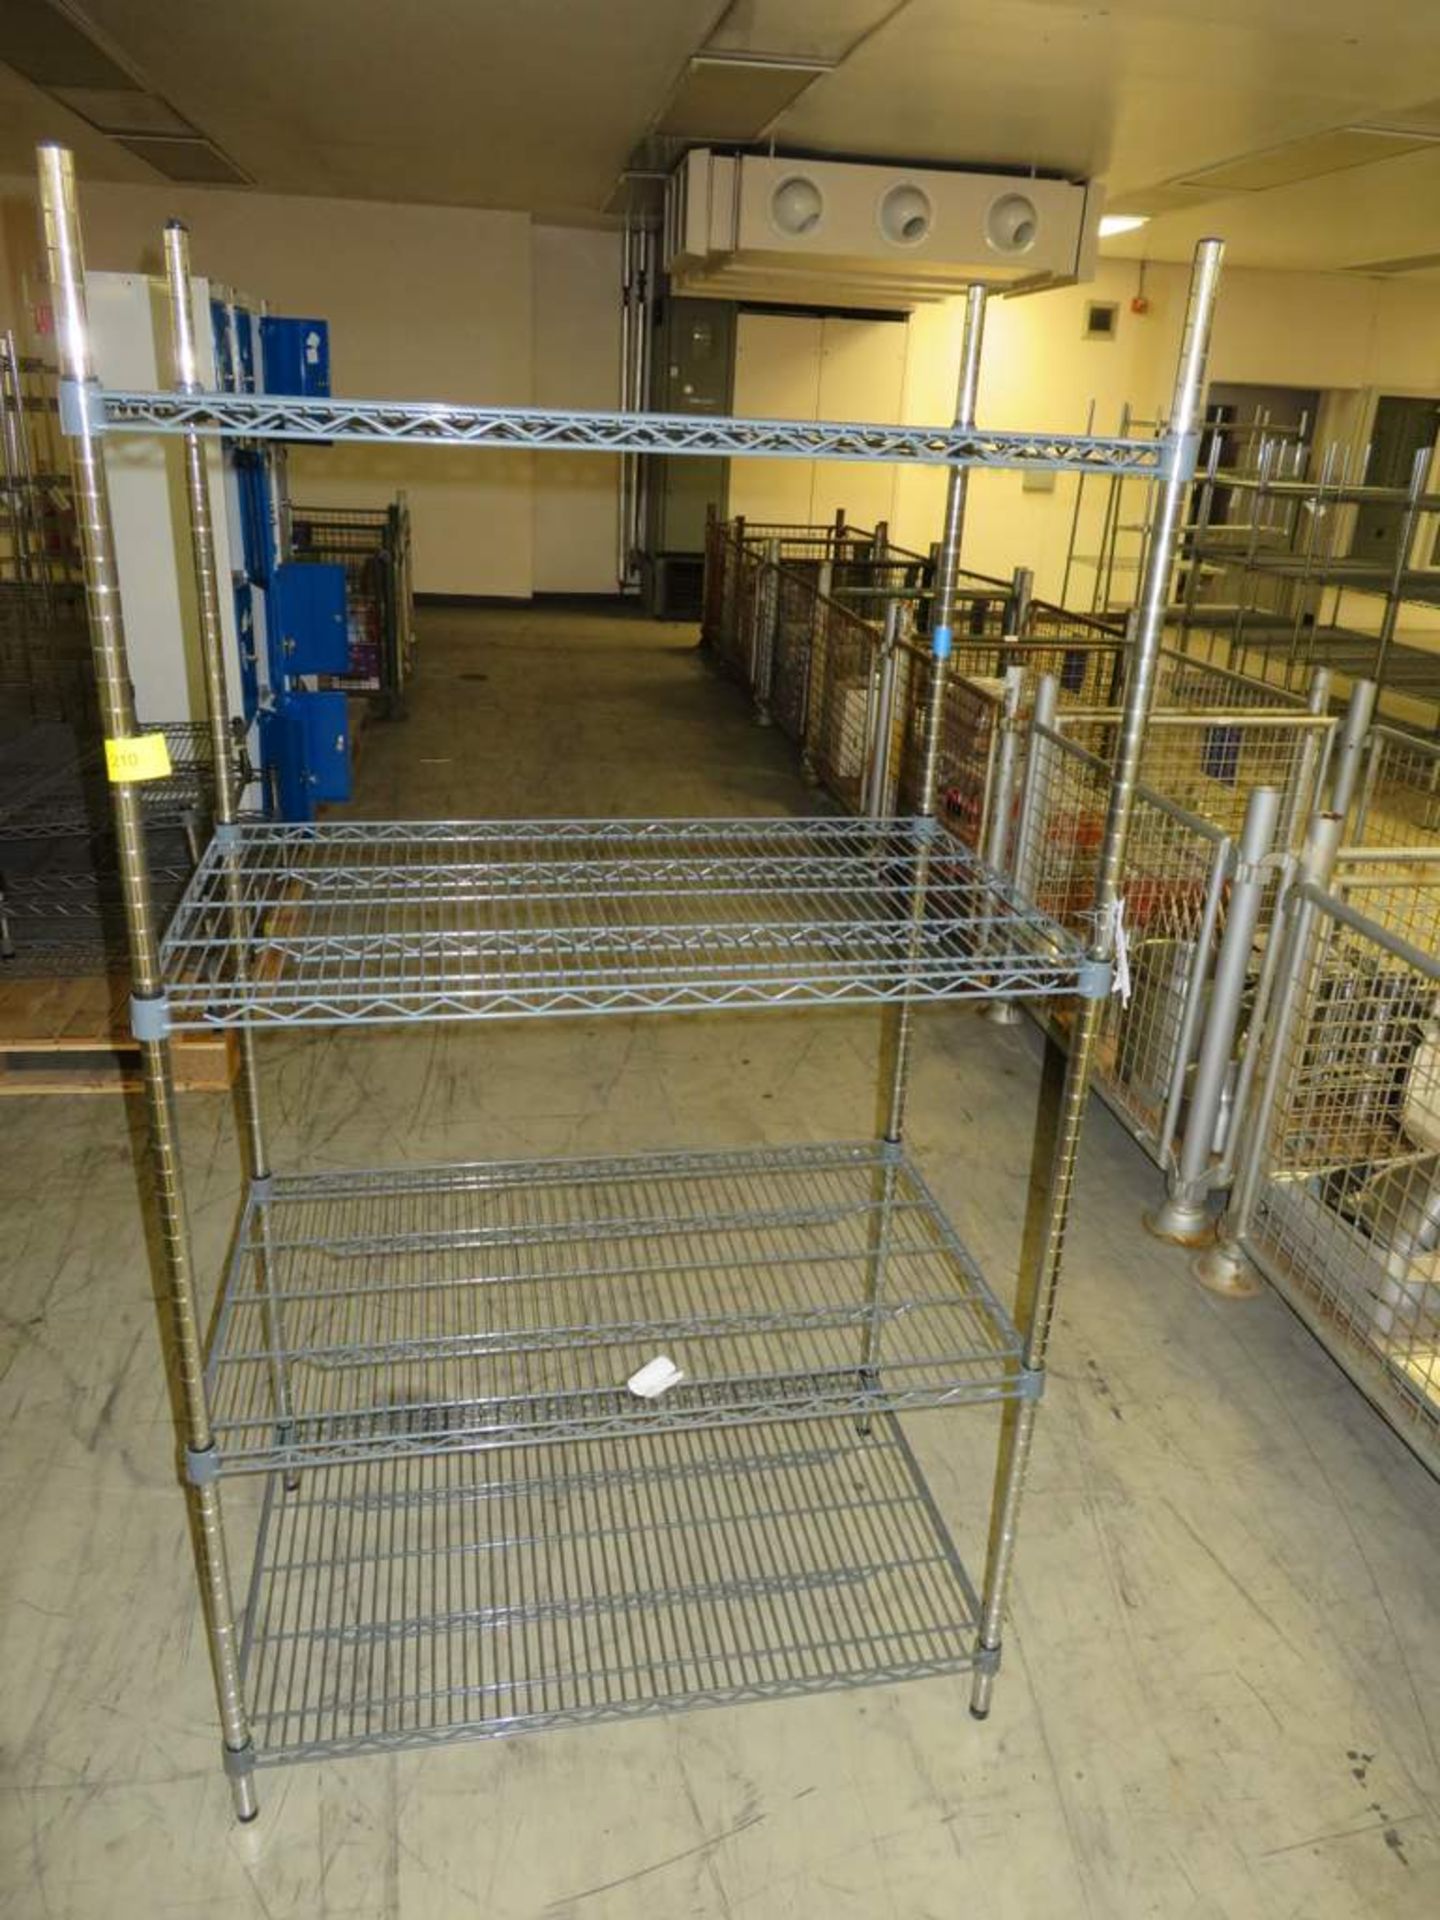 4 Tier kitchen storage shelving unit - 98 x 60 x 182cm (WxDxH)